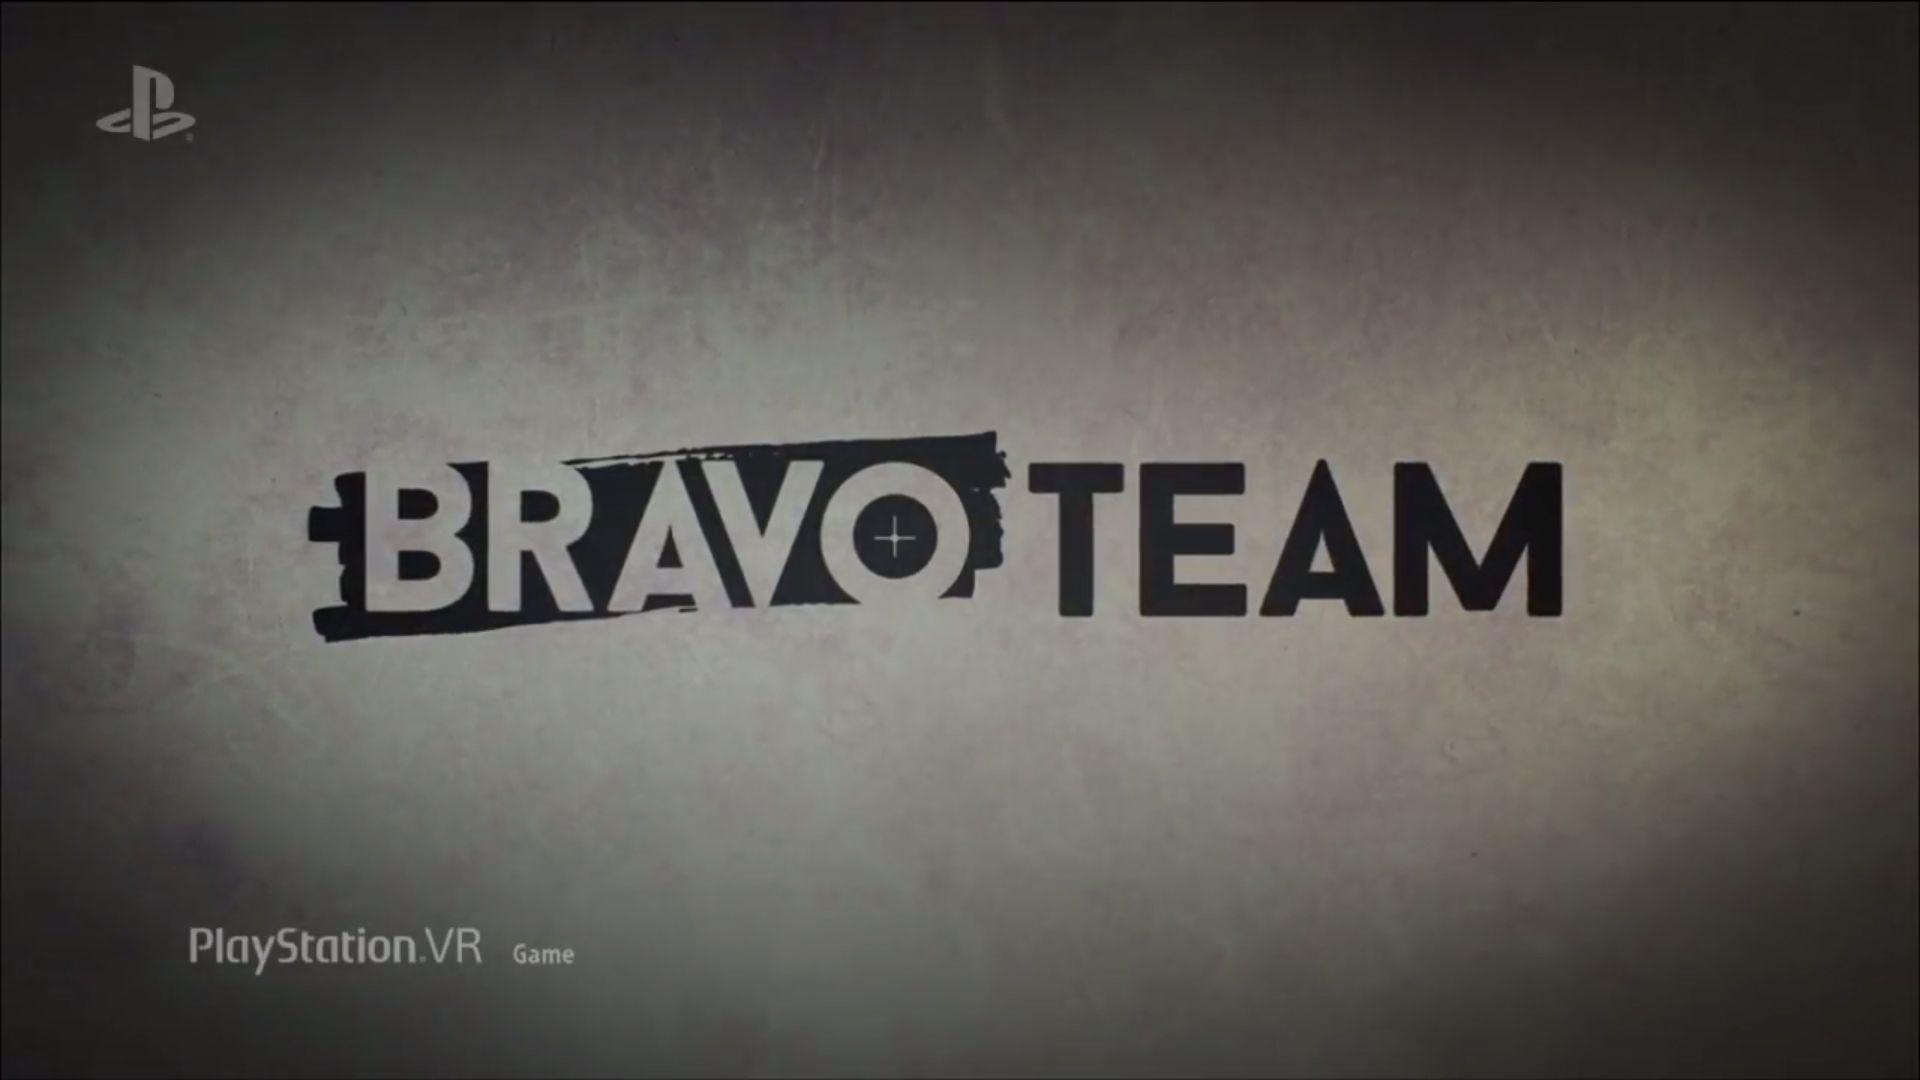 Save Bravo Team Video Game Wallpaper. Read games reviews, play